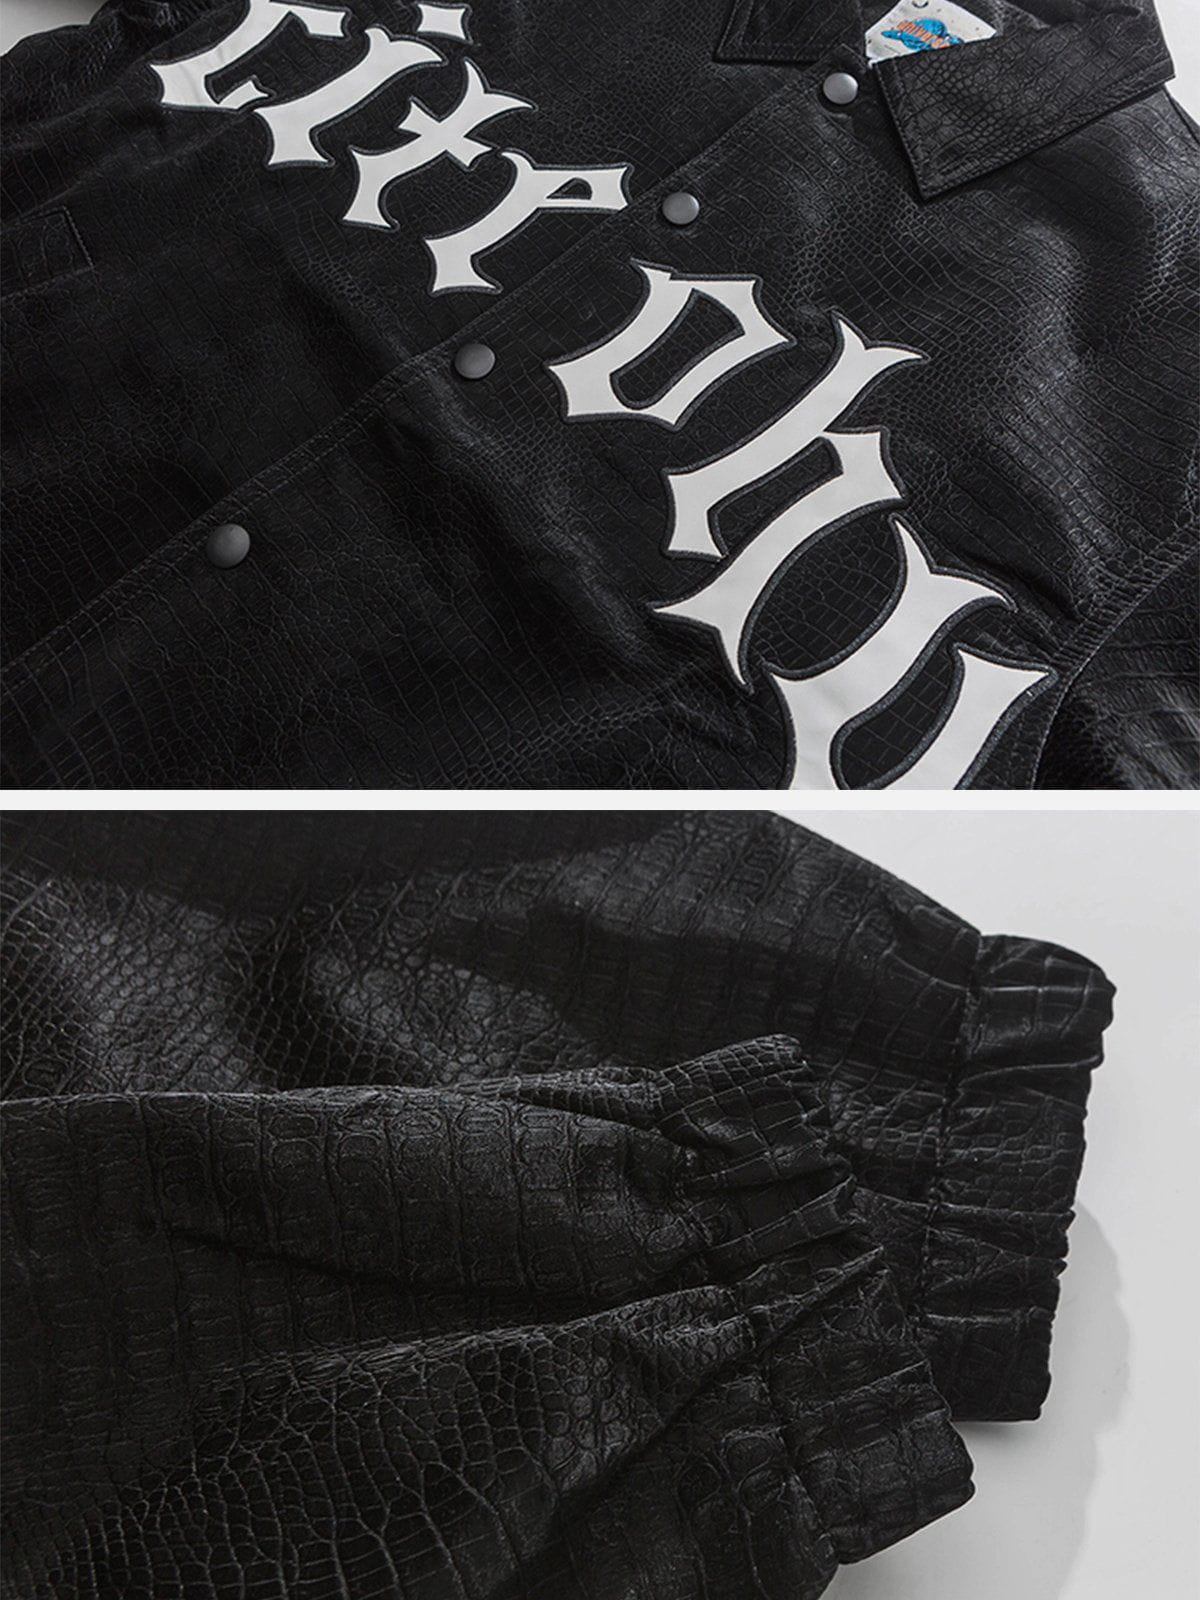 Eprezzy® - Gothic Letter Embroidered Leather Jacket Streetwear Fashion - eprezzy.com